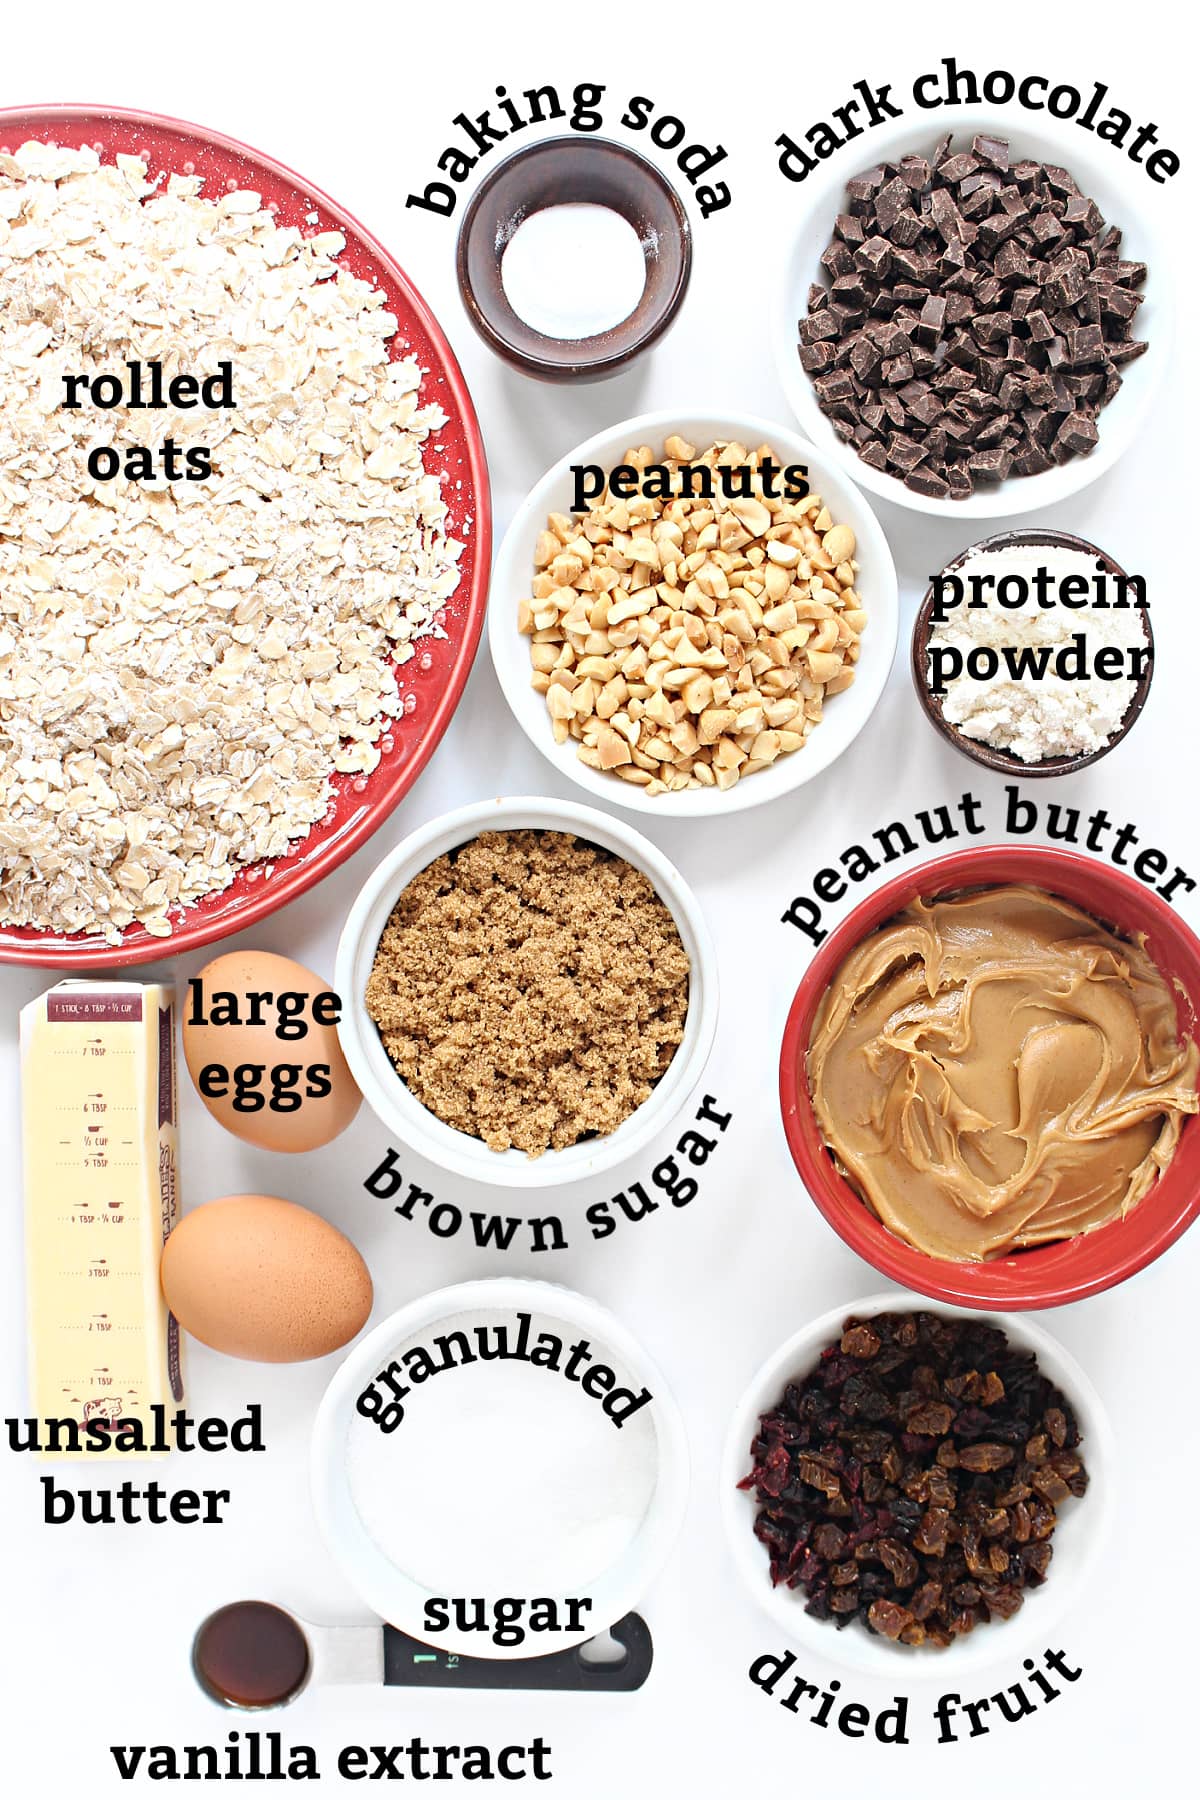 Ingredients: oats, butter, peanut butter, eggs, brown sugar, white sugar, dried fruit, peanuts, vanilla, protein powder, chocolate, baking soda.